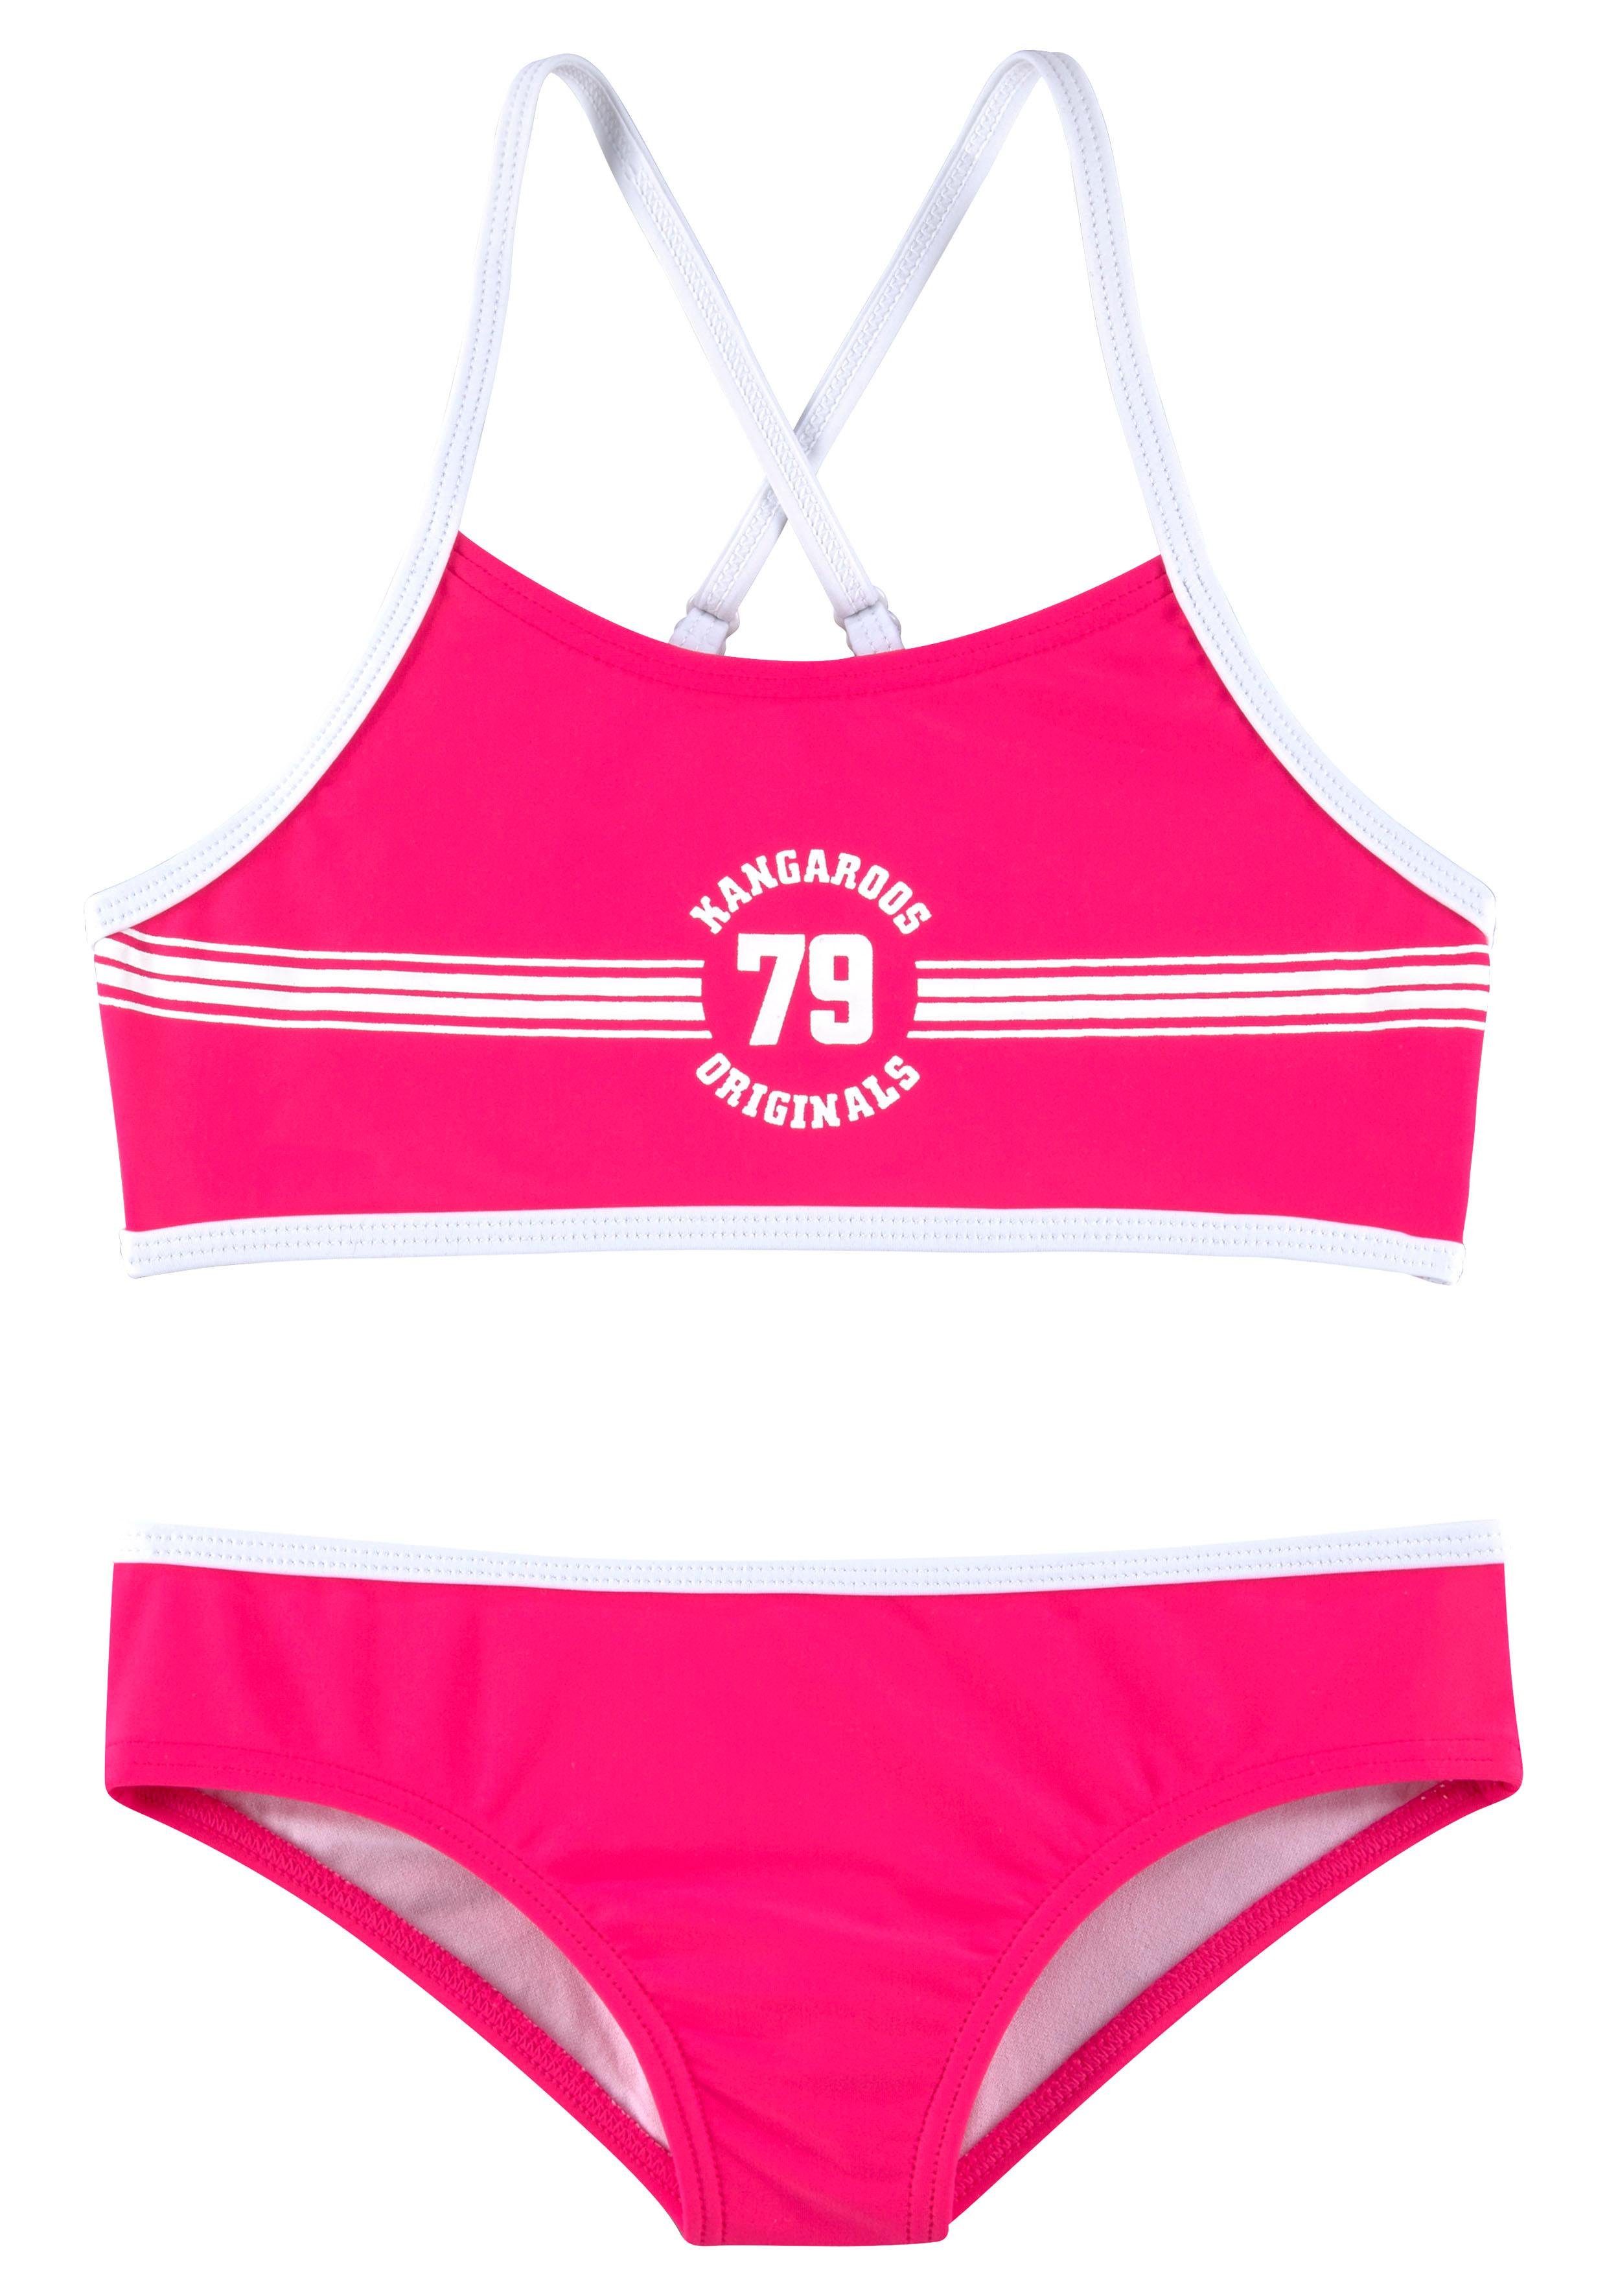 KangaROOS Bustier-Bikini Sporty mit sportlichem Frontdruck | Bustier-Bikinis